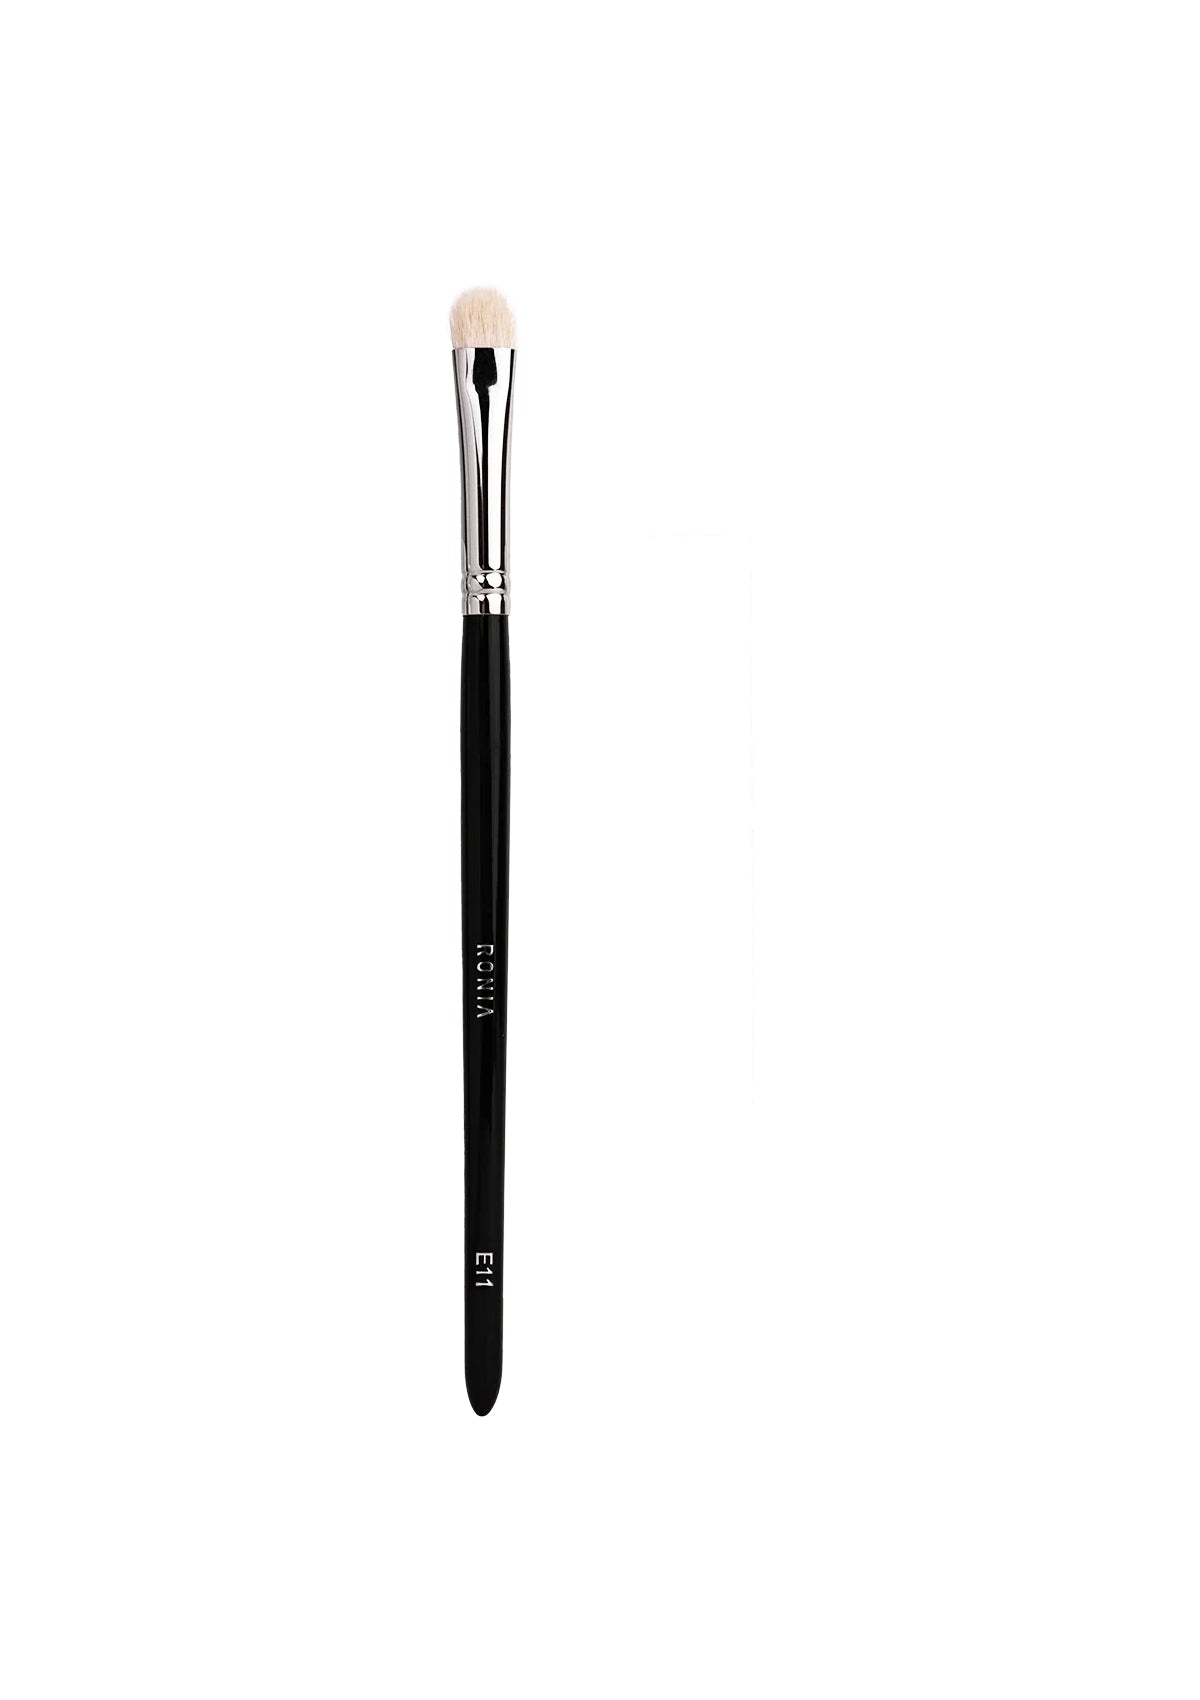 E11: All over flat eyeshadow brush